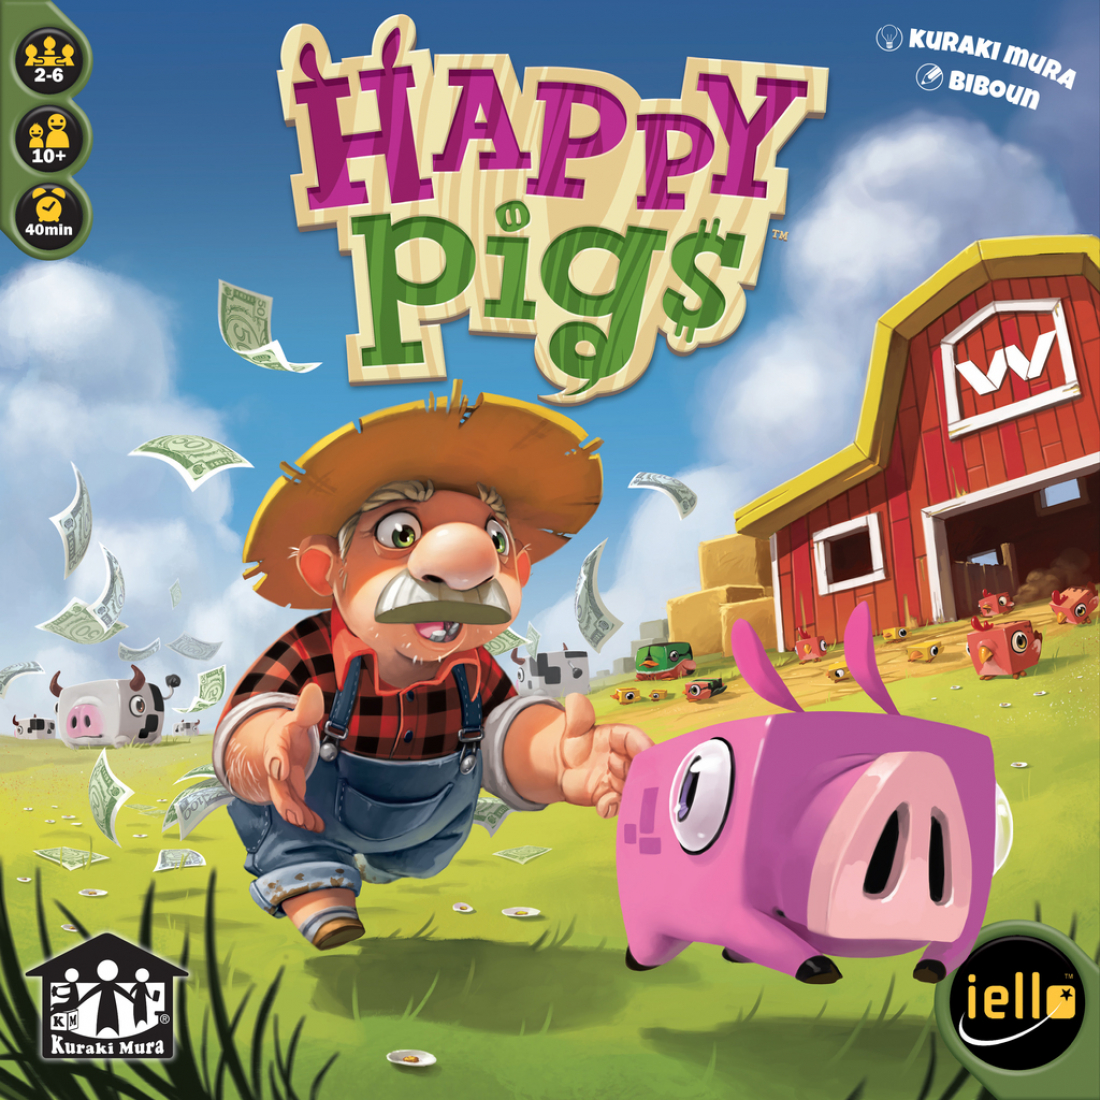 visuel Test d'Happy pigs